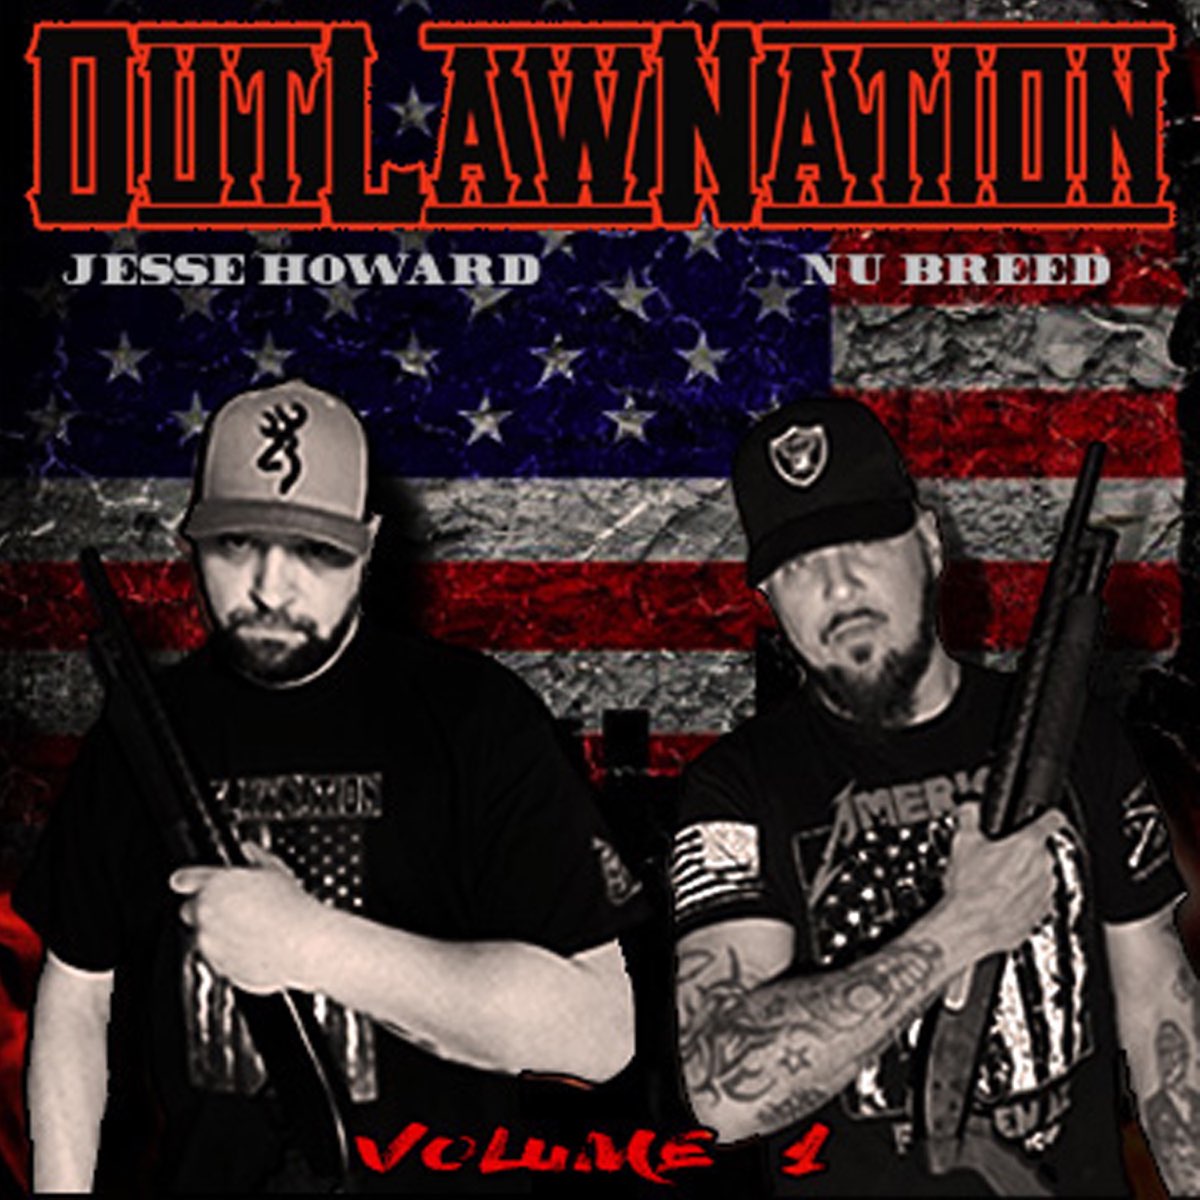 Jesse howard outlaw tattoo